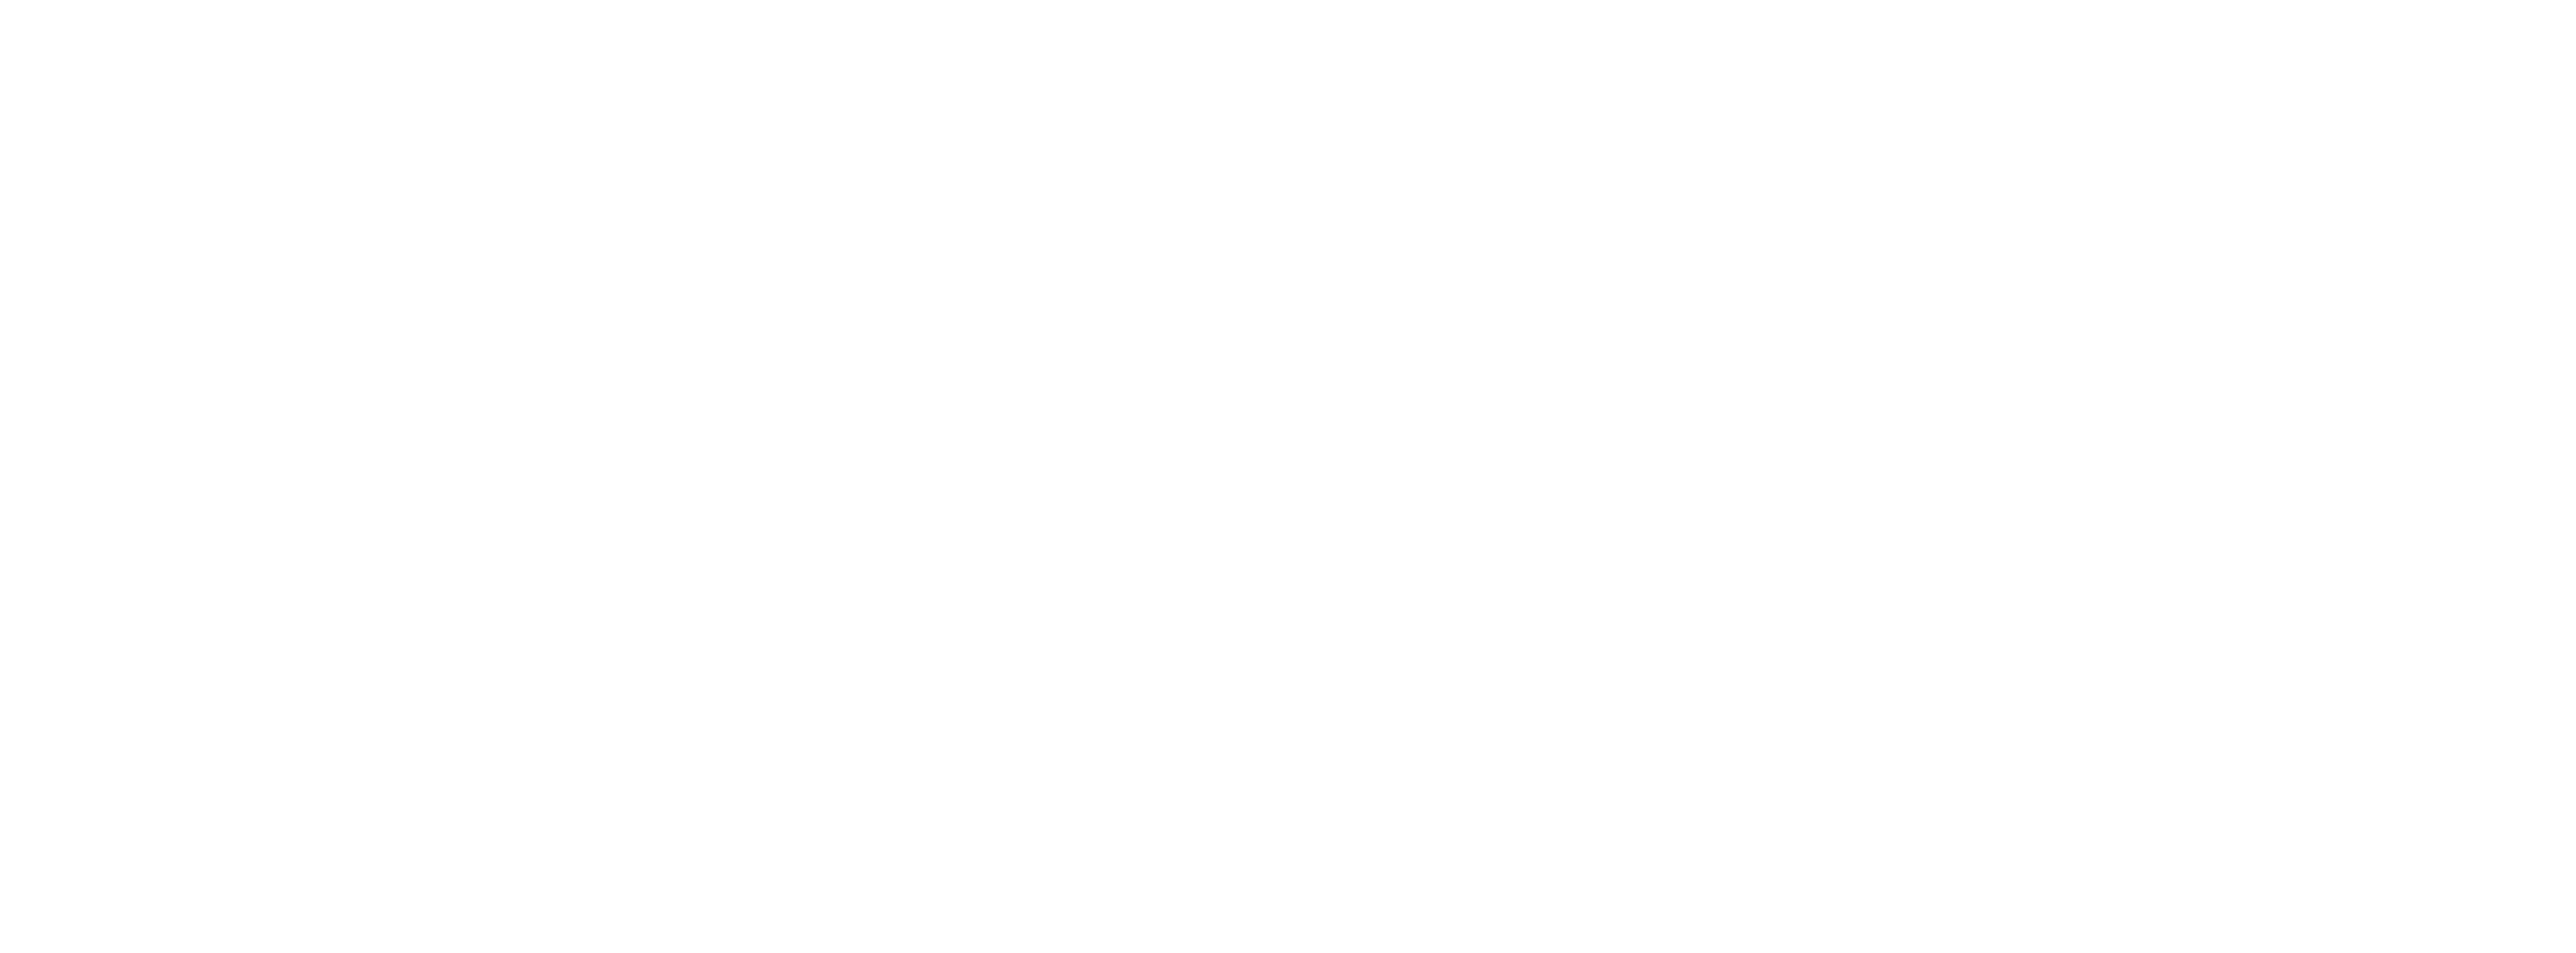 VÖRK logo, läpinäkyvä tausta, transparent background